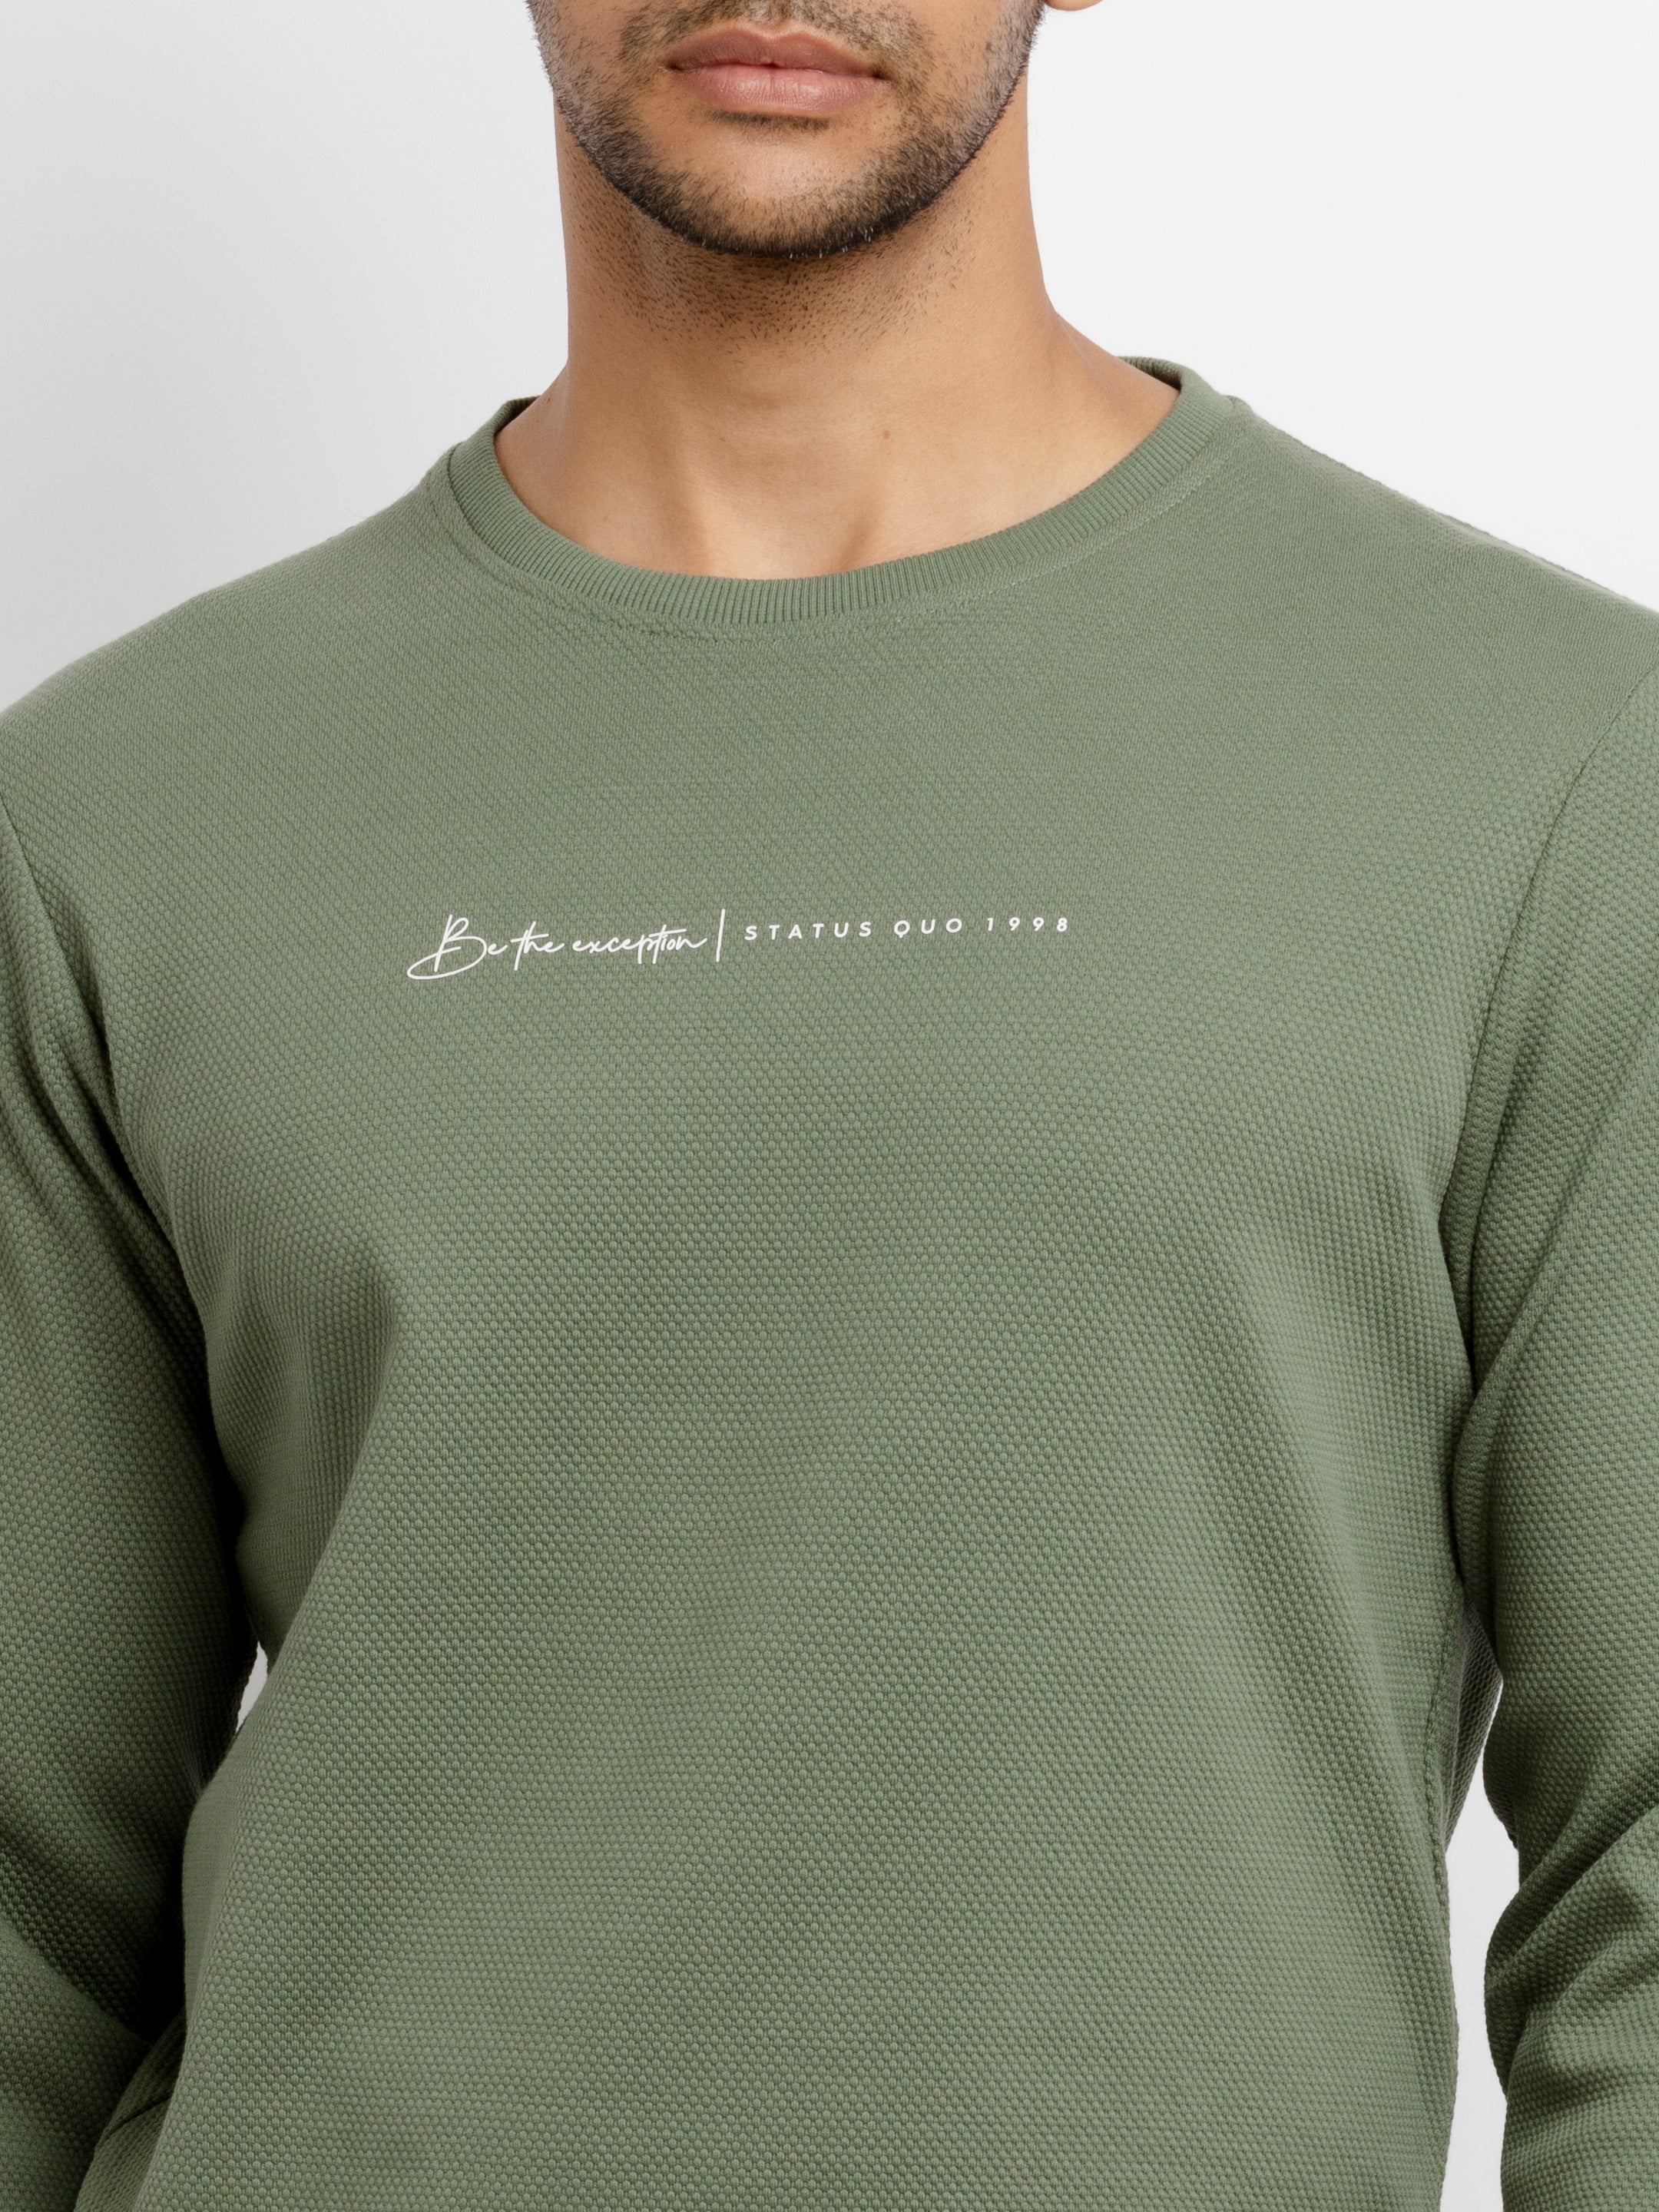 printed sweatshirts